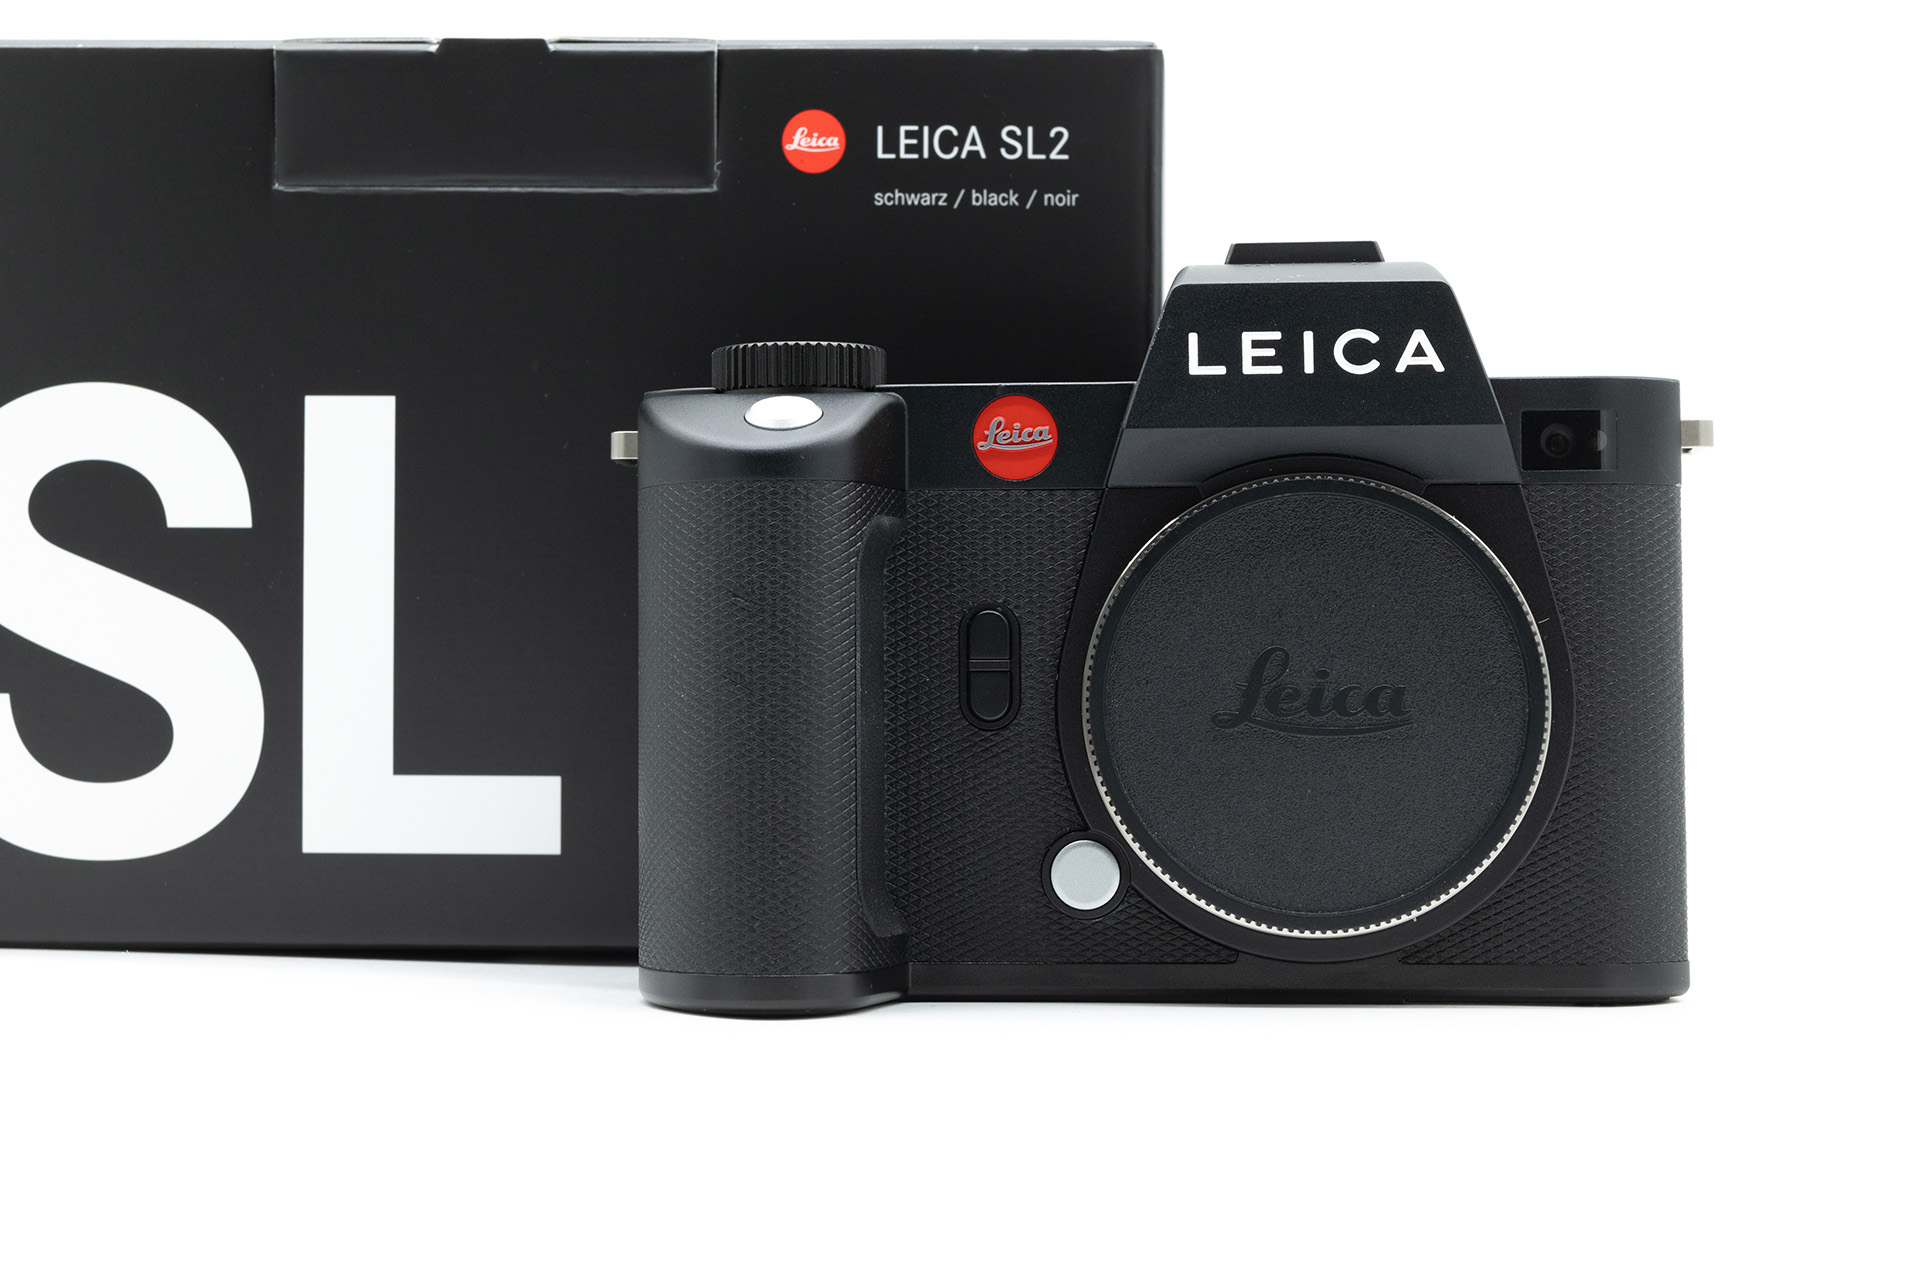 Leica SL2, black